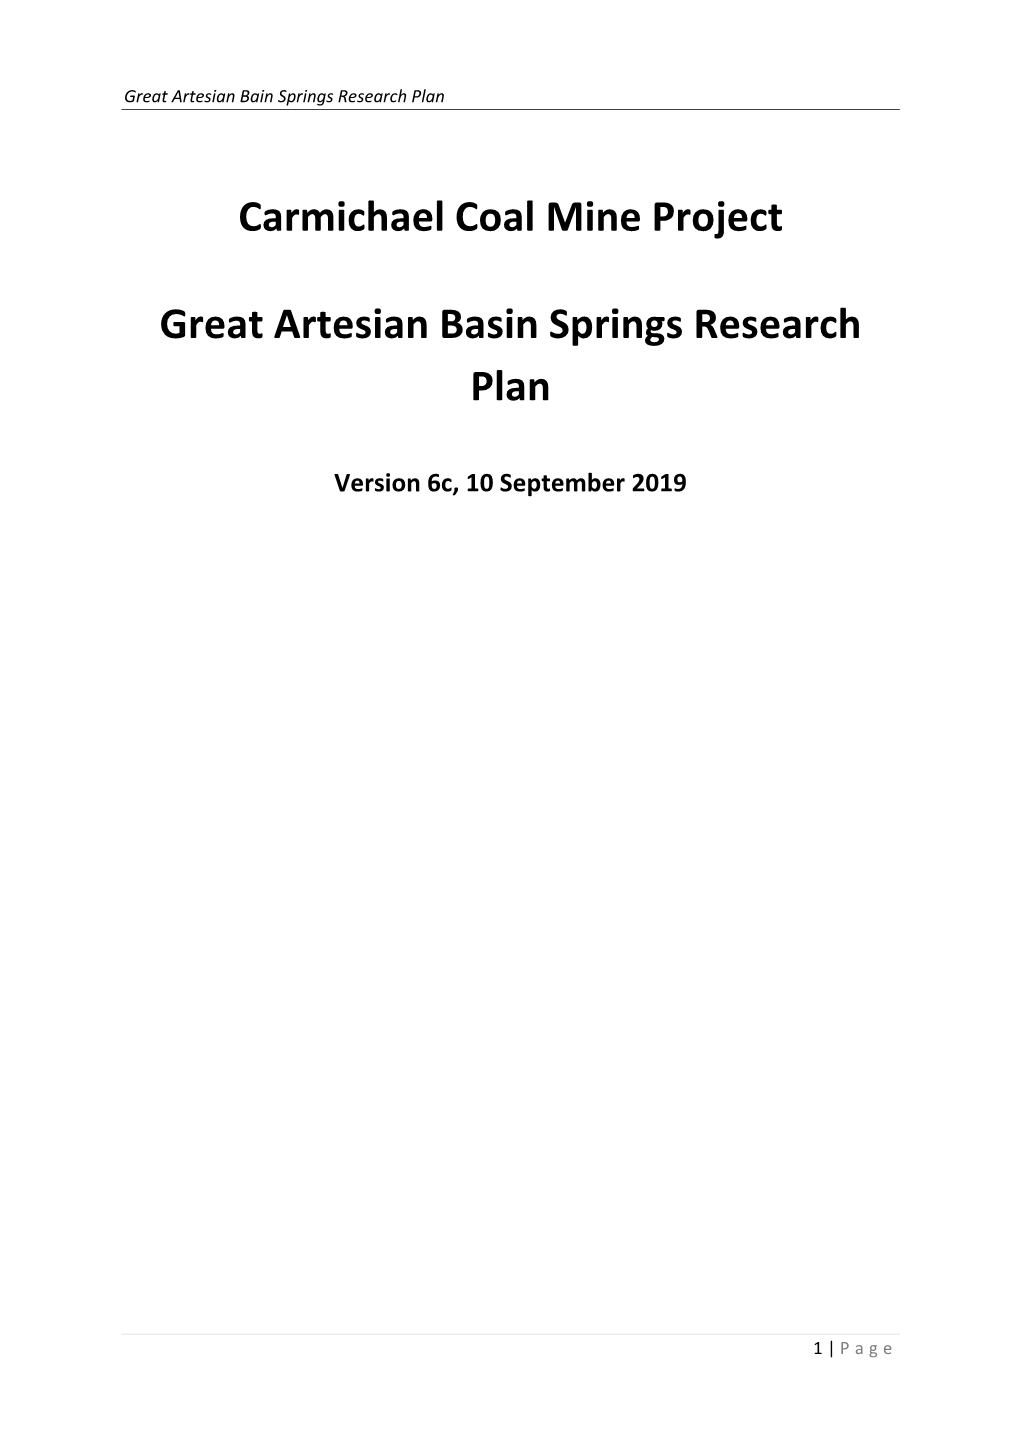 Carmichael Coal Mine Project Great Artesian Basin Springs Research